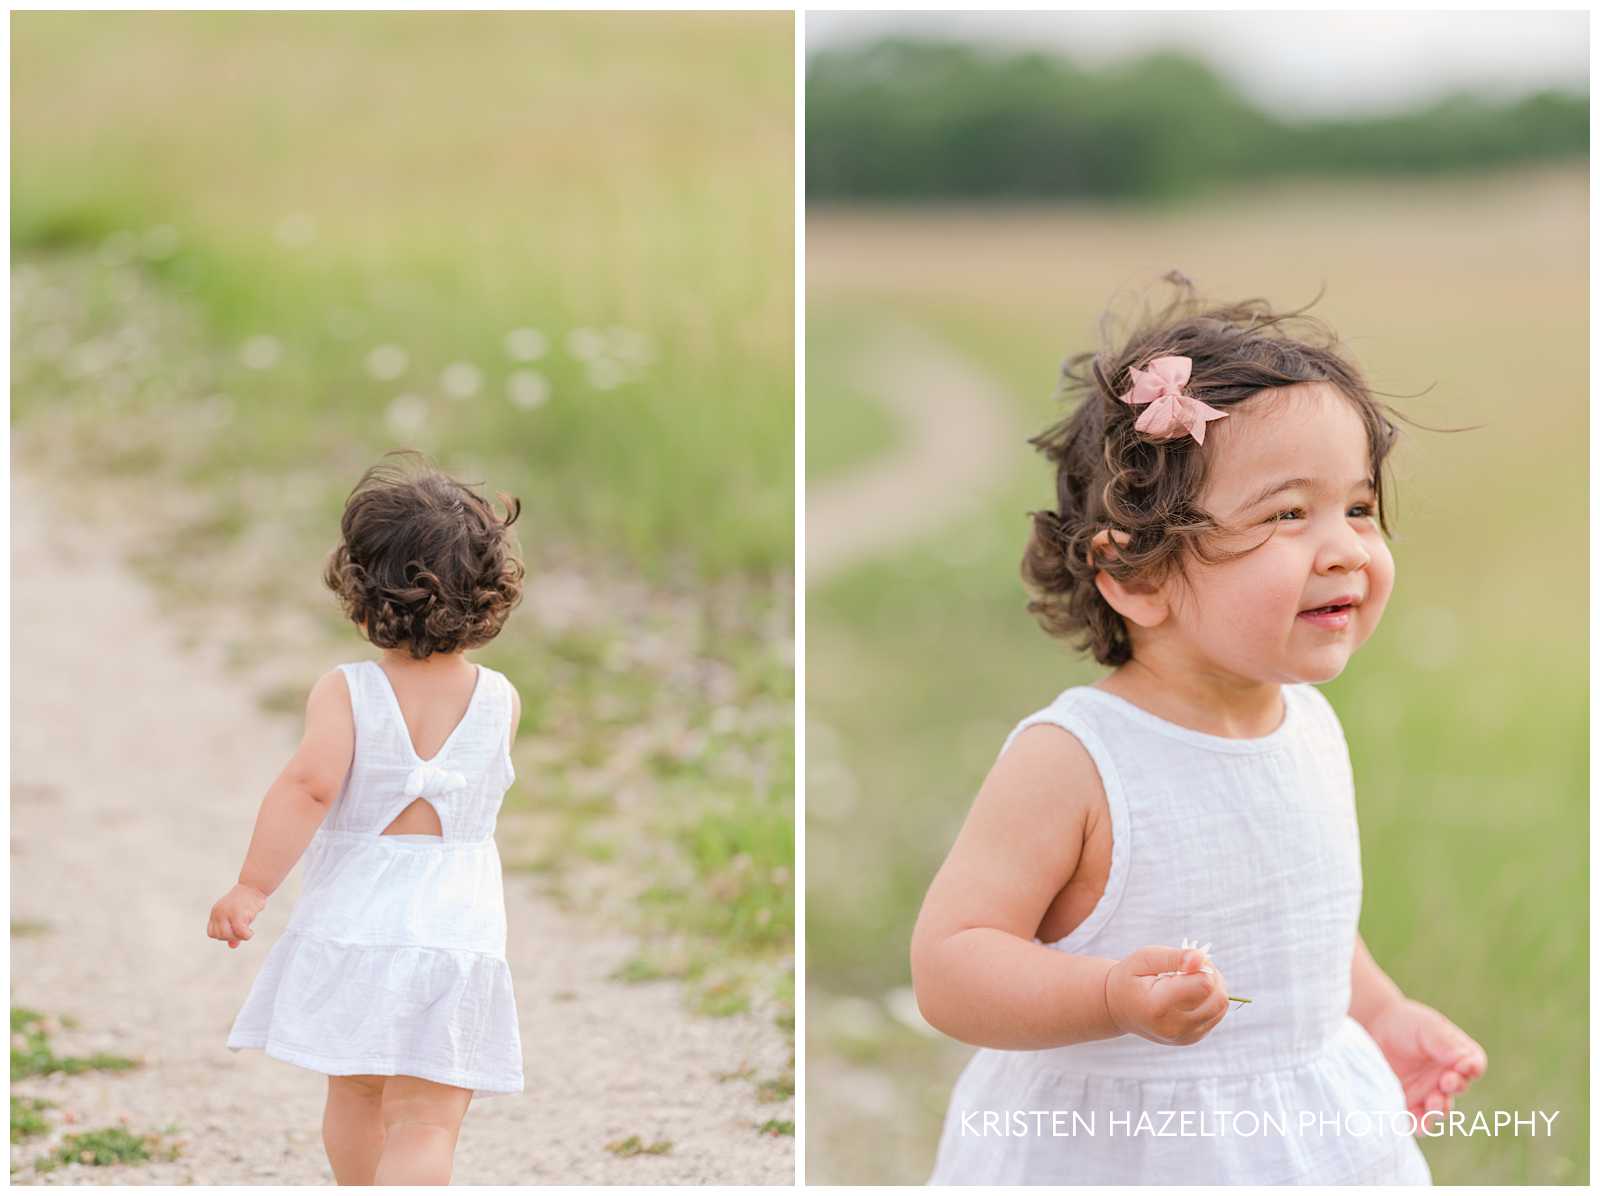 Happy toddler girl exploring an Illinois meadow